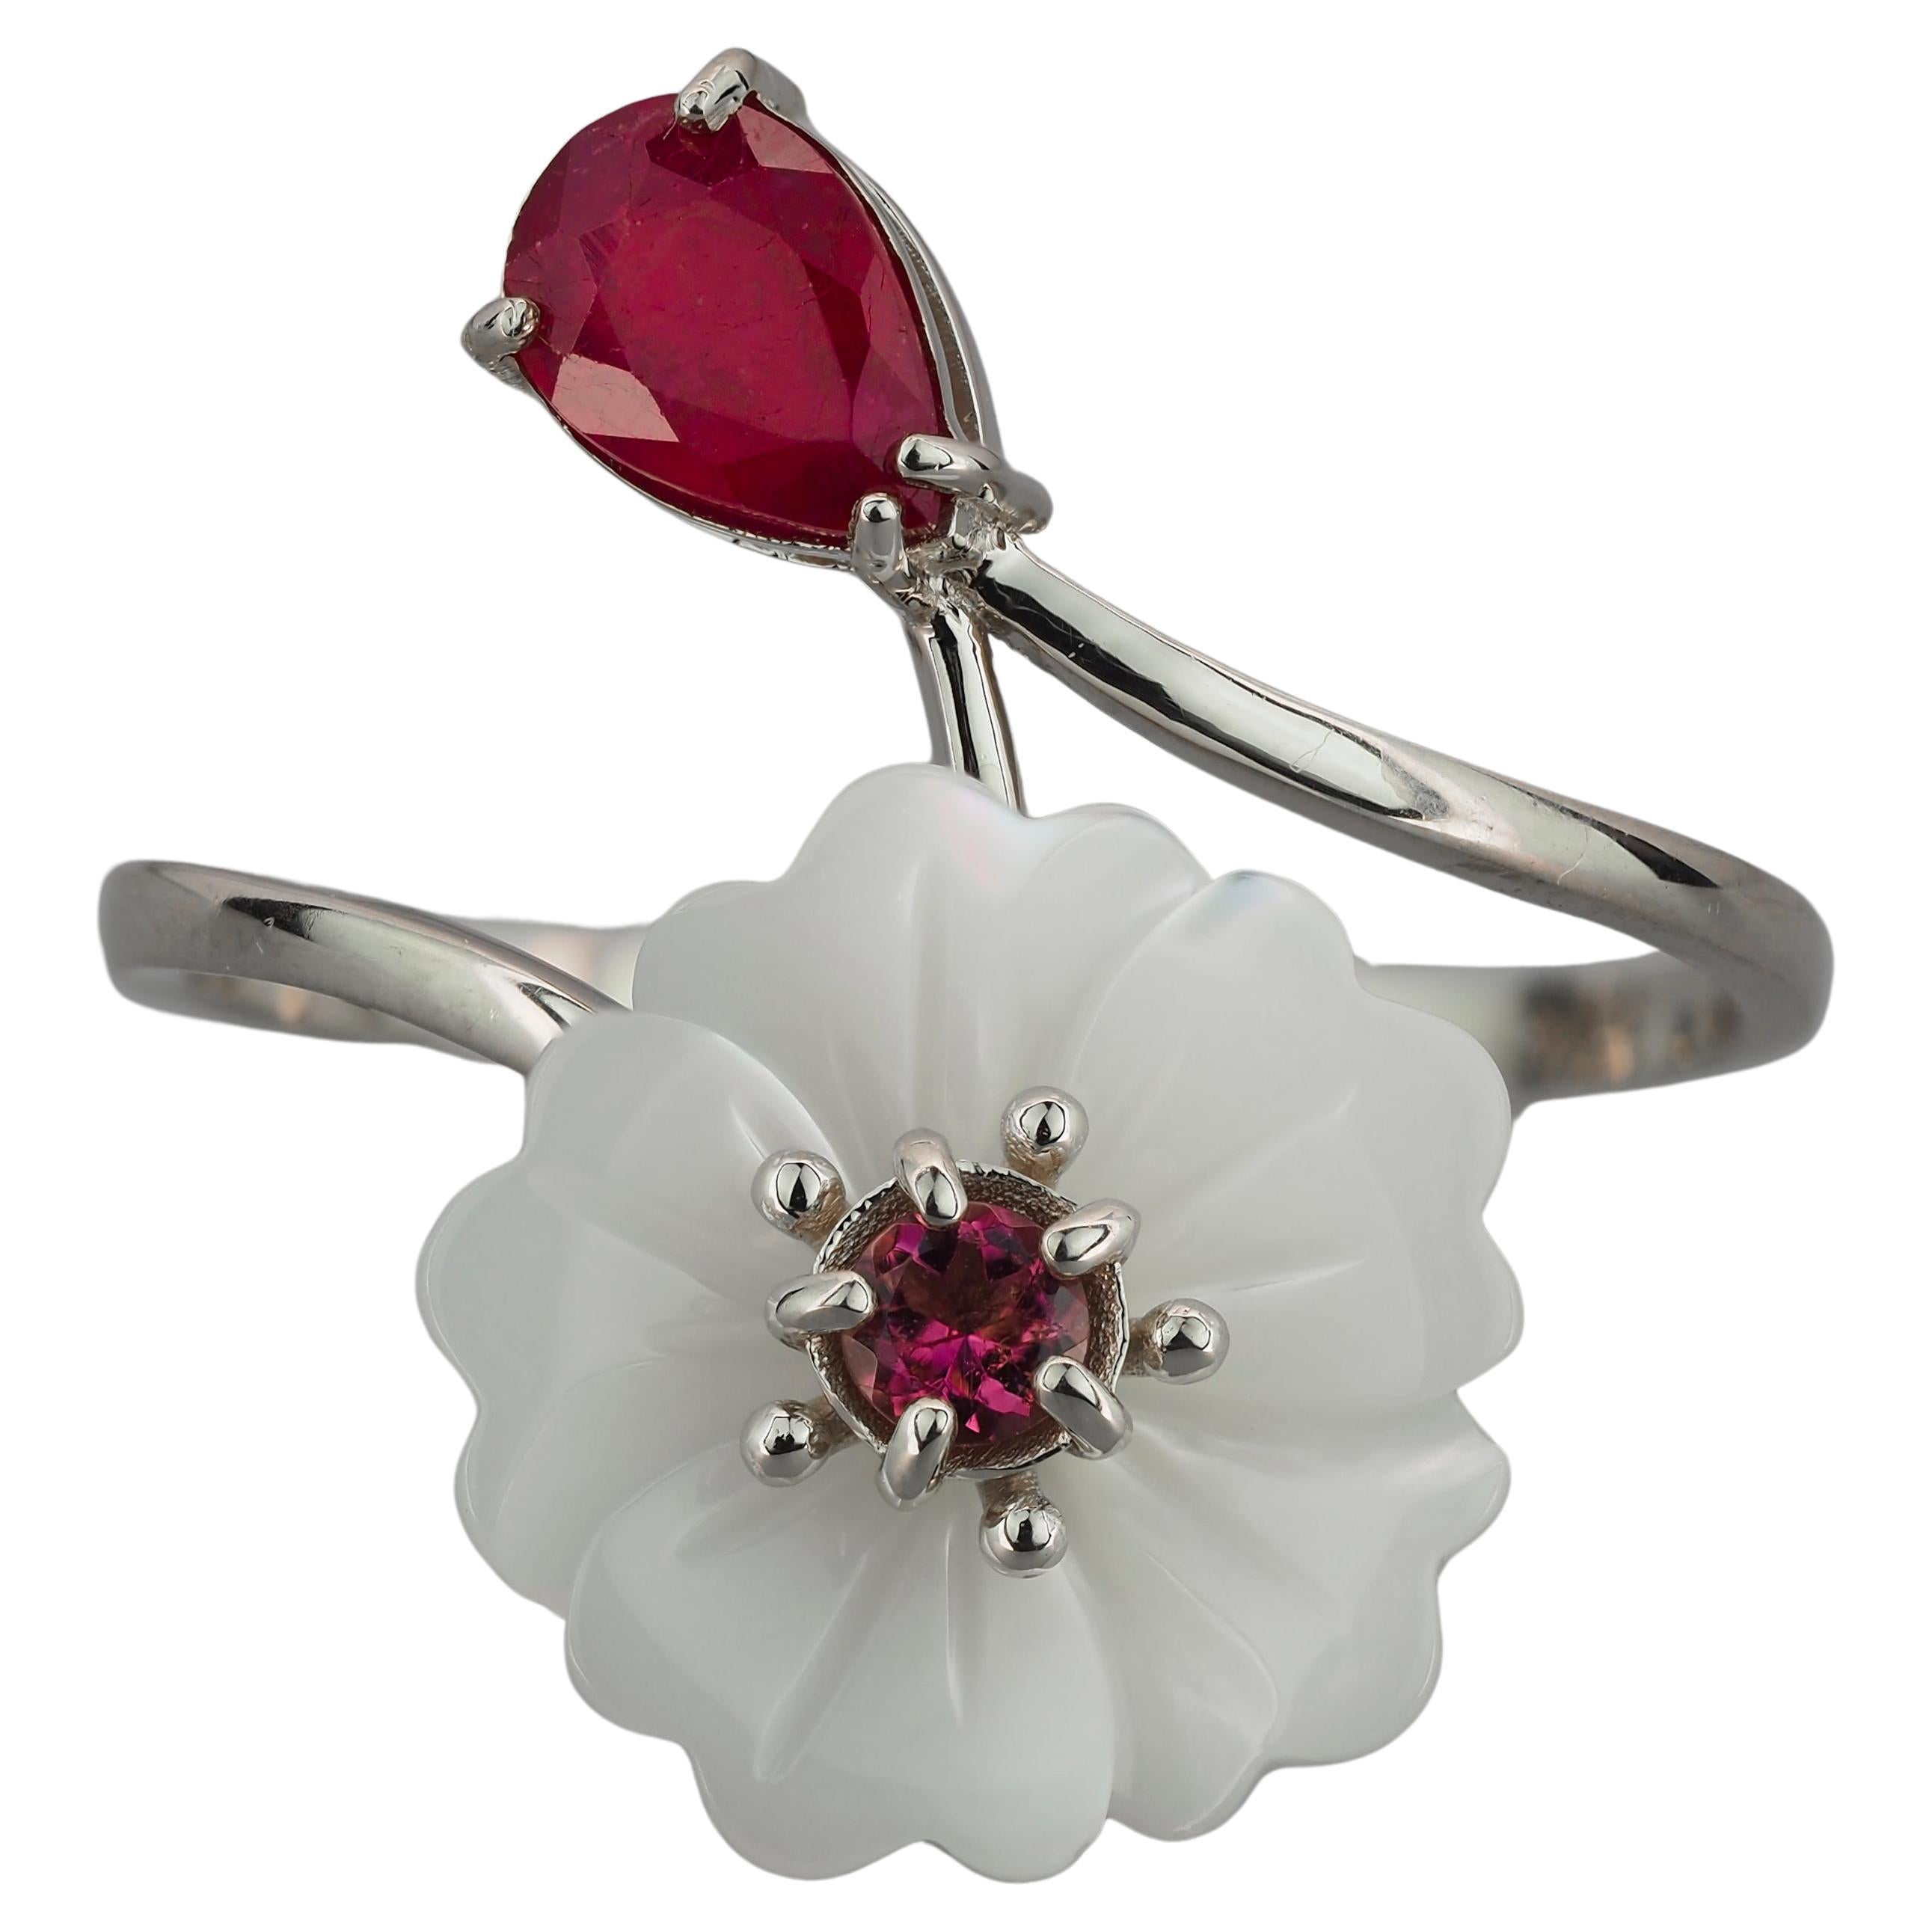 For Sale:  Carved Flower 14k ring with gemstones